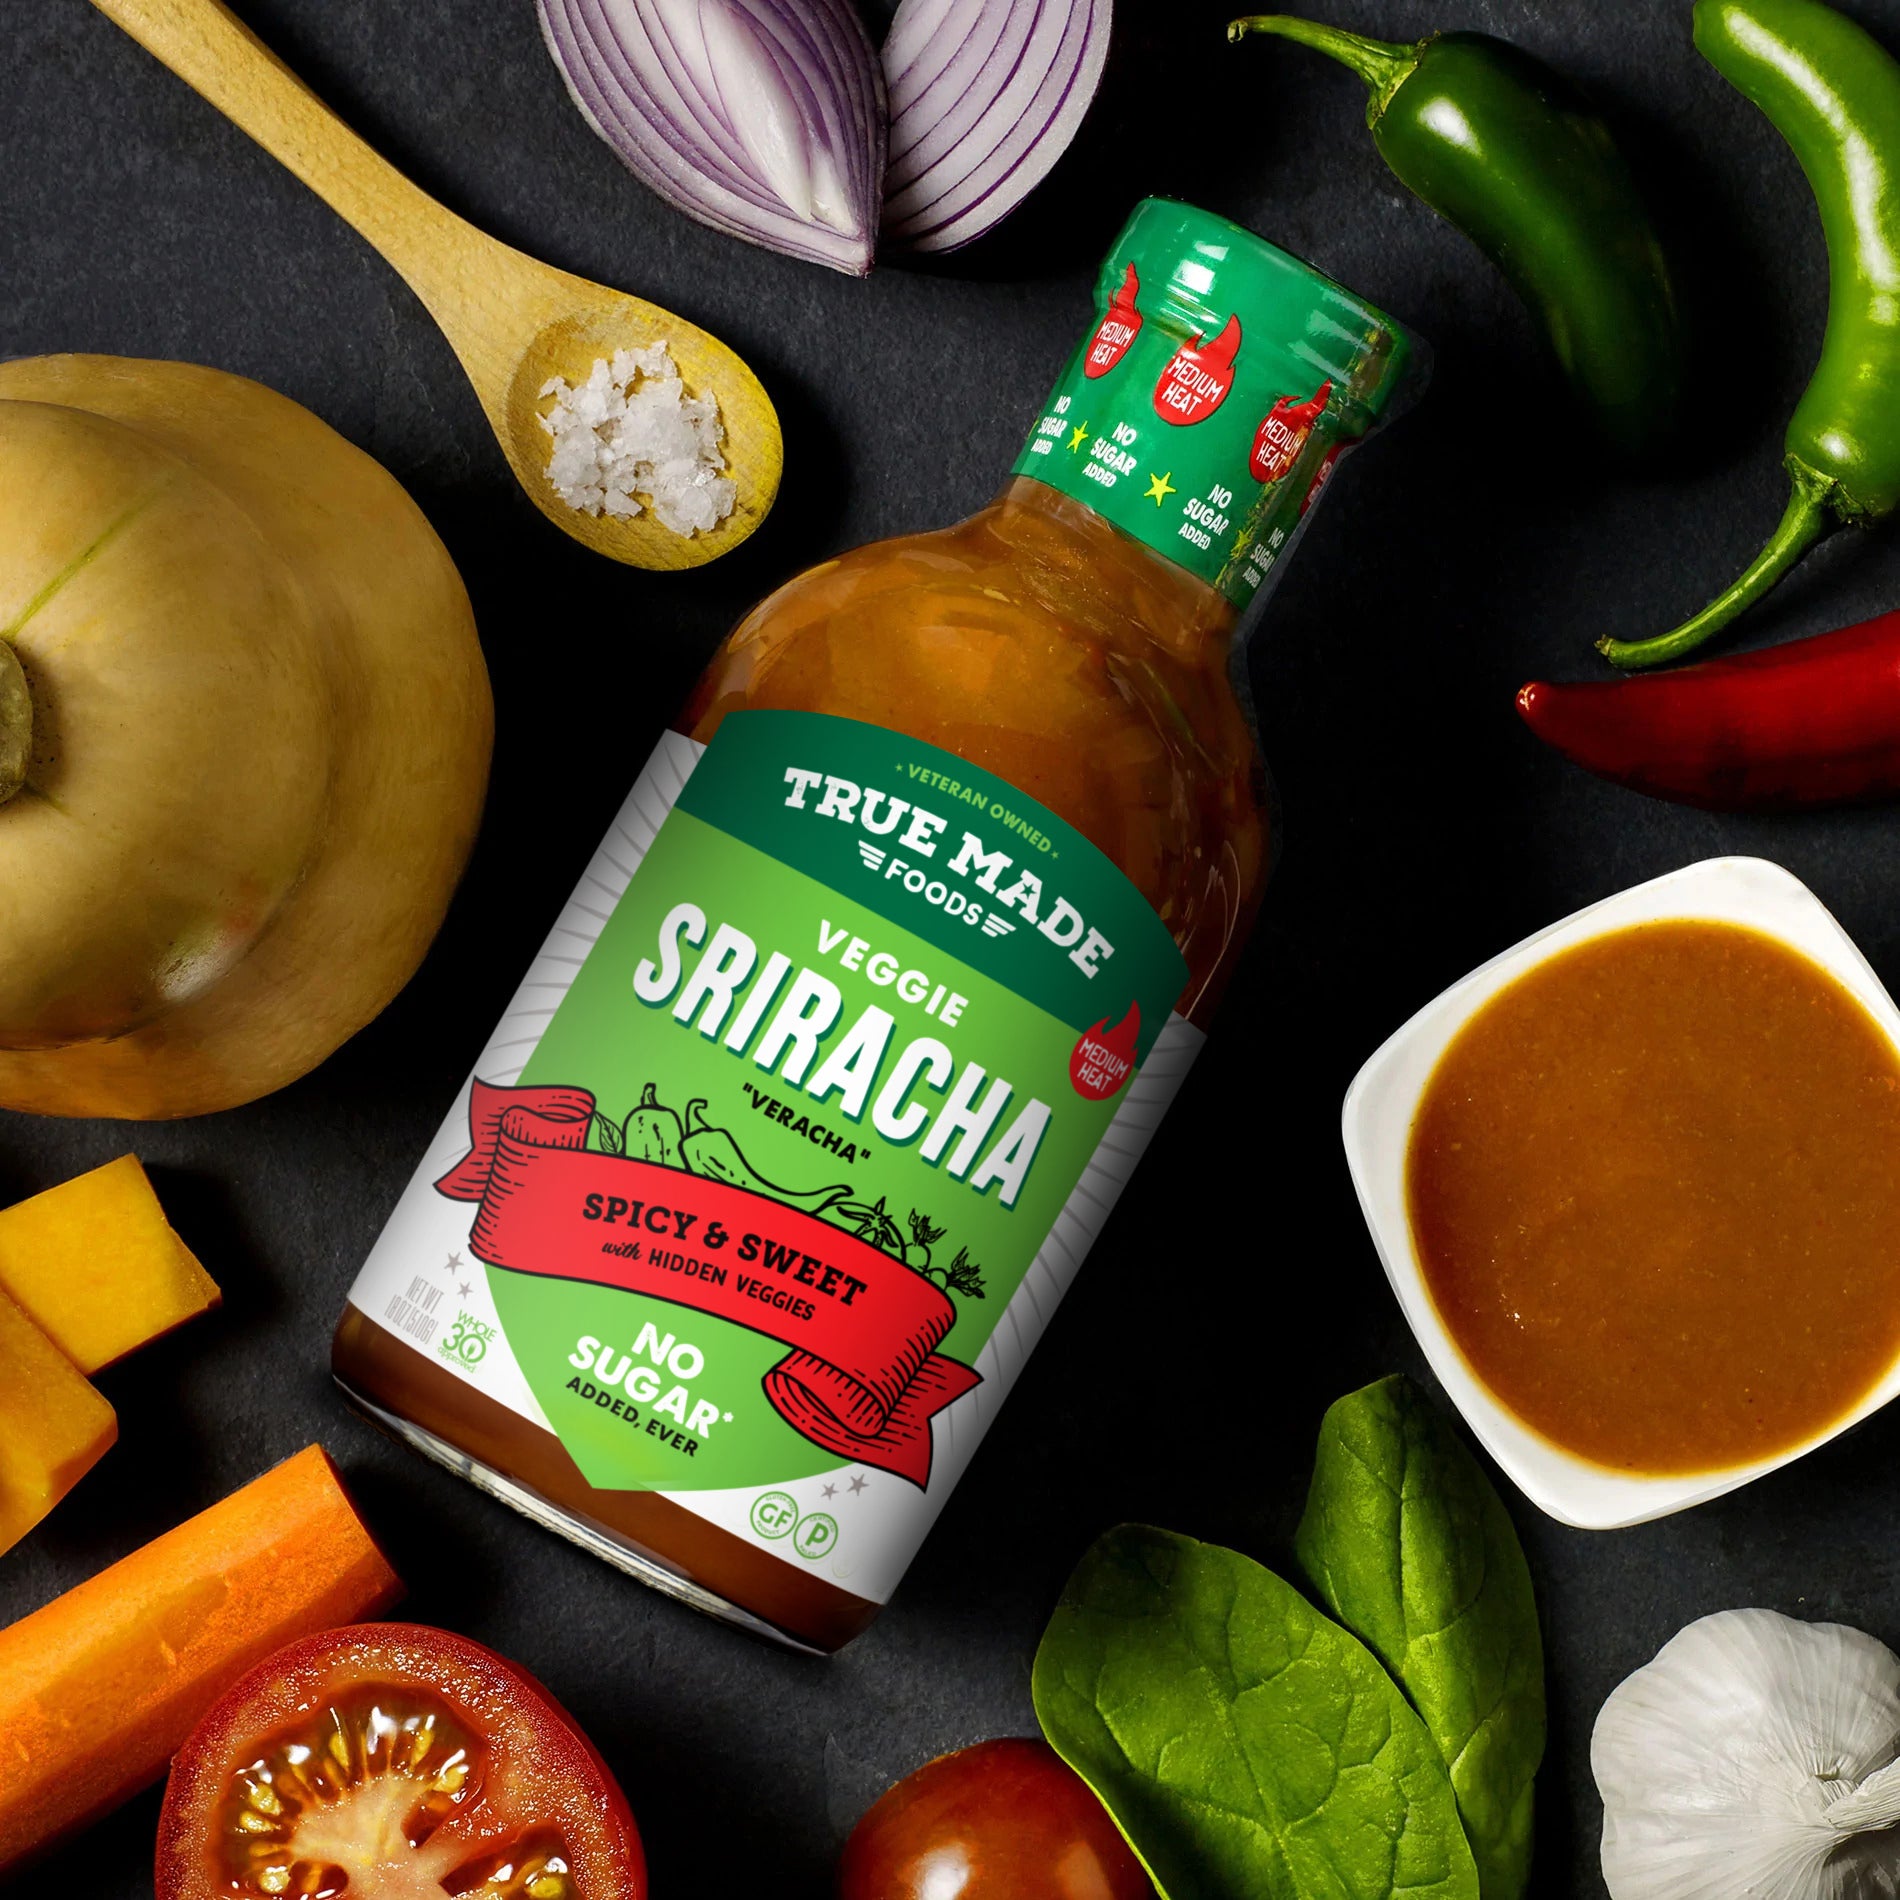 No Sugar Sriracha (Veracha), 9oz Glass Bottle – TrueMadeFoods